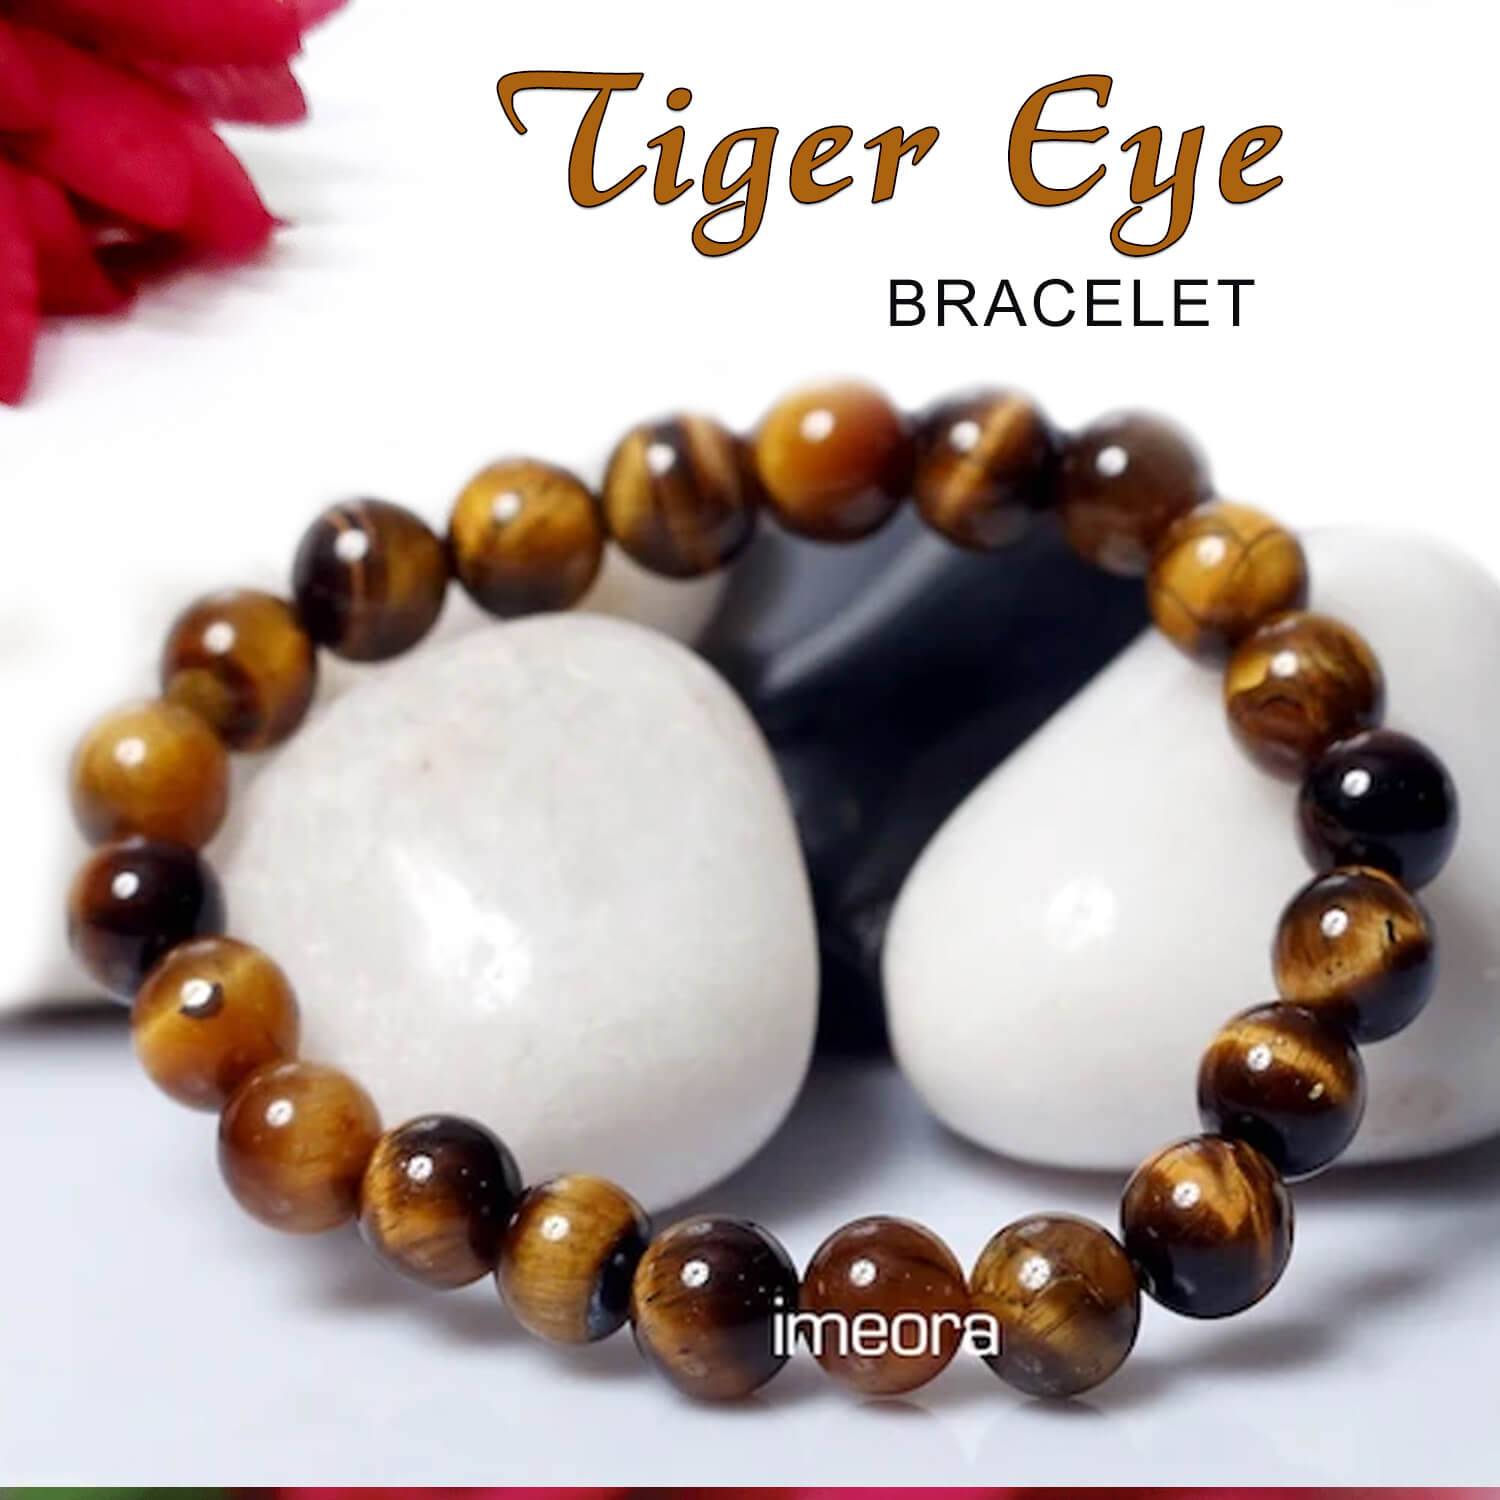 Certified Natural Stone Bracelet– Imeora